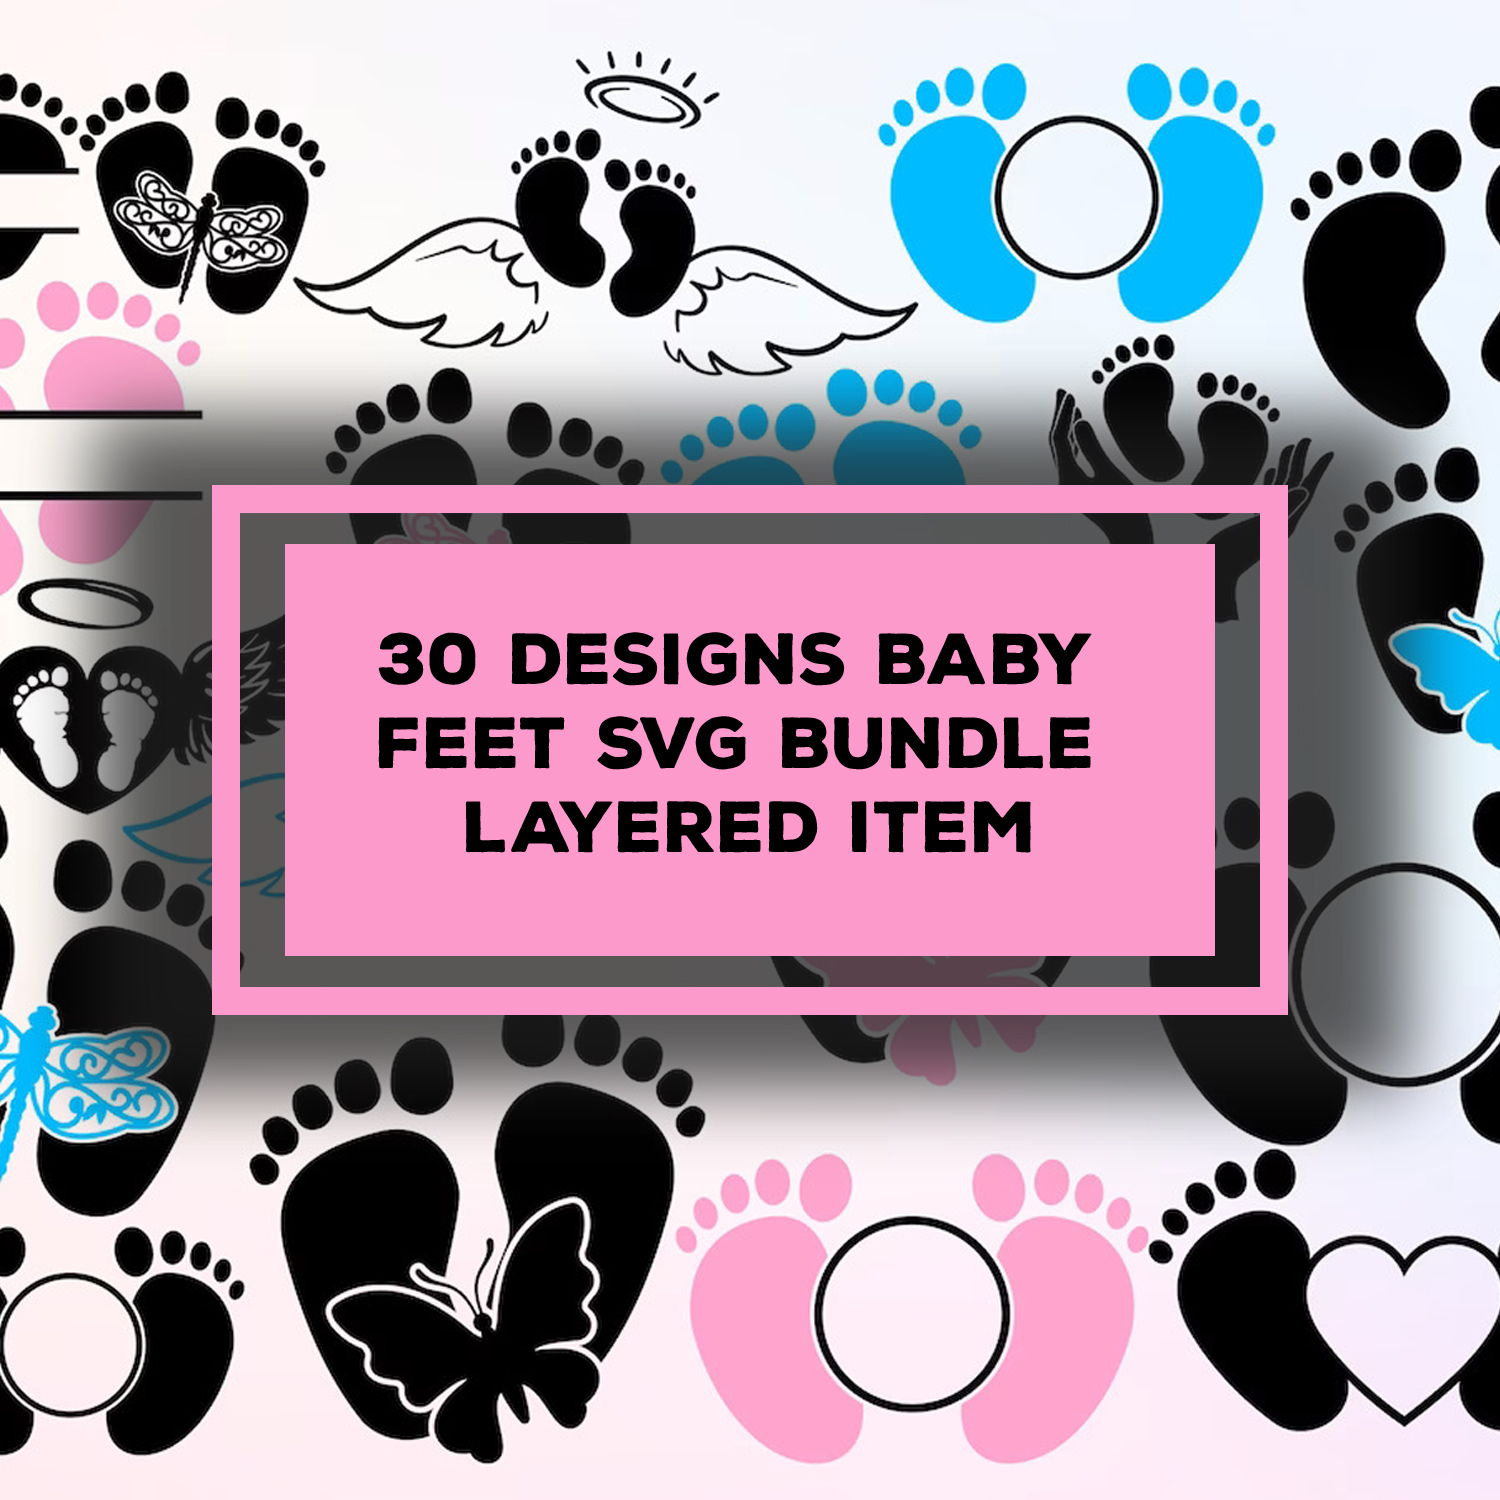 Prints of 30 designs baby feet.